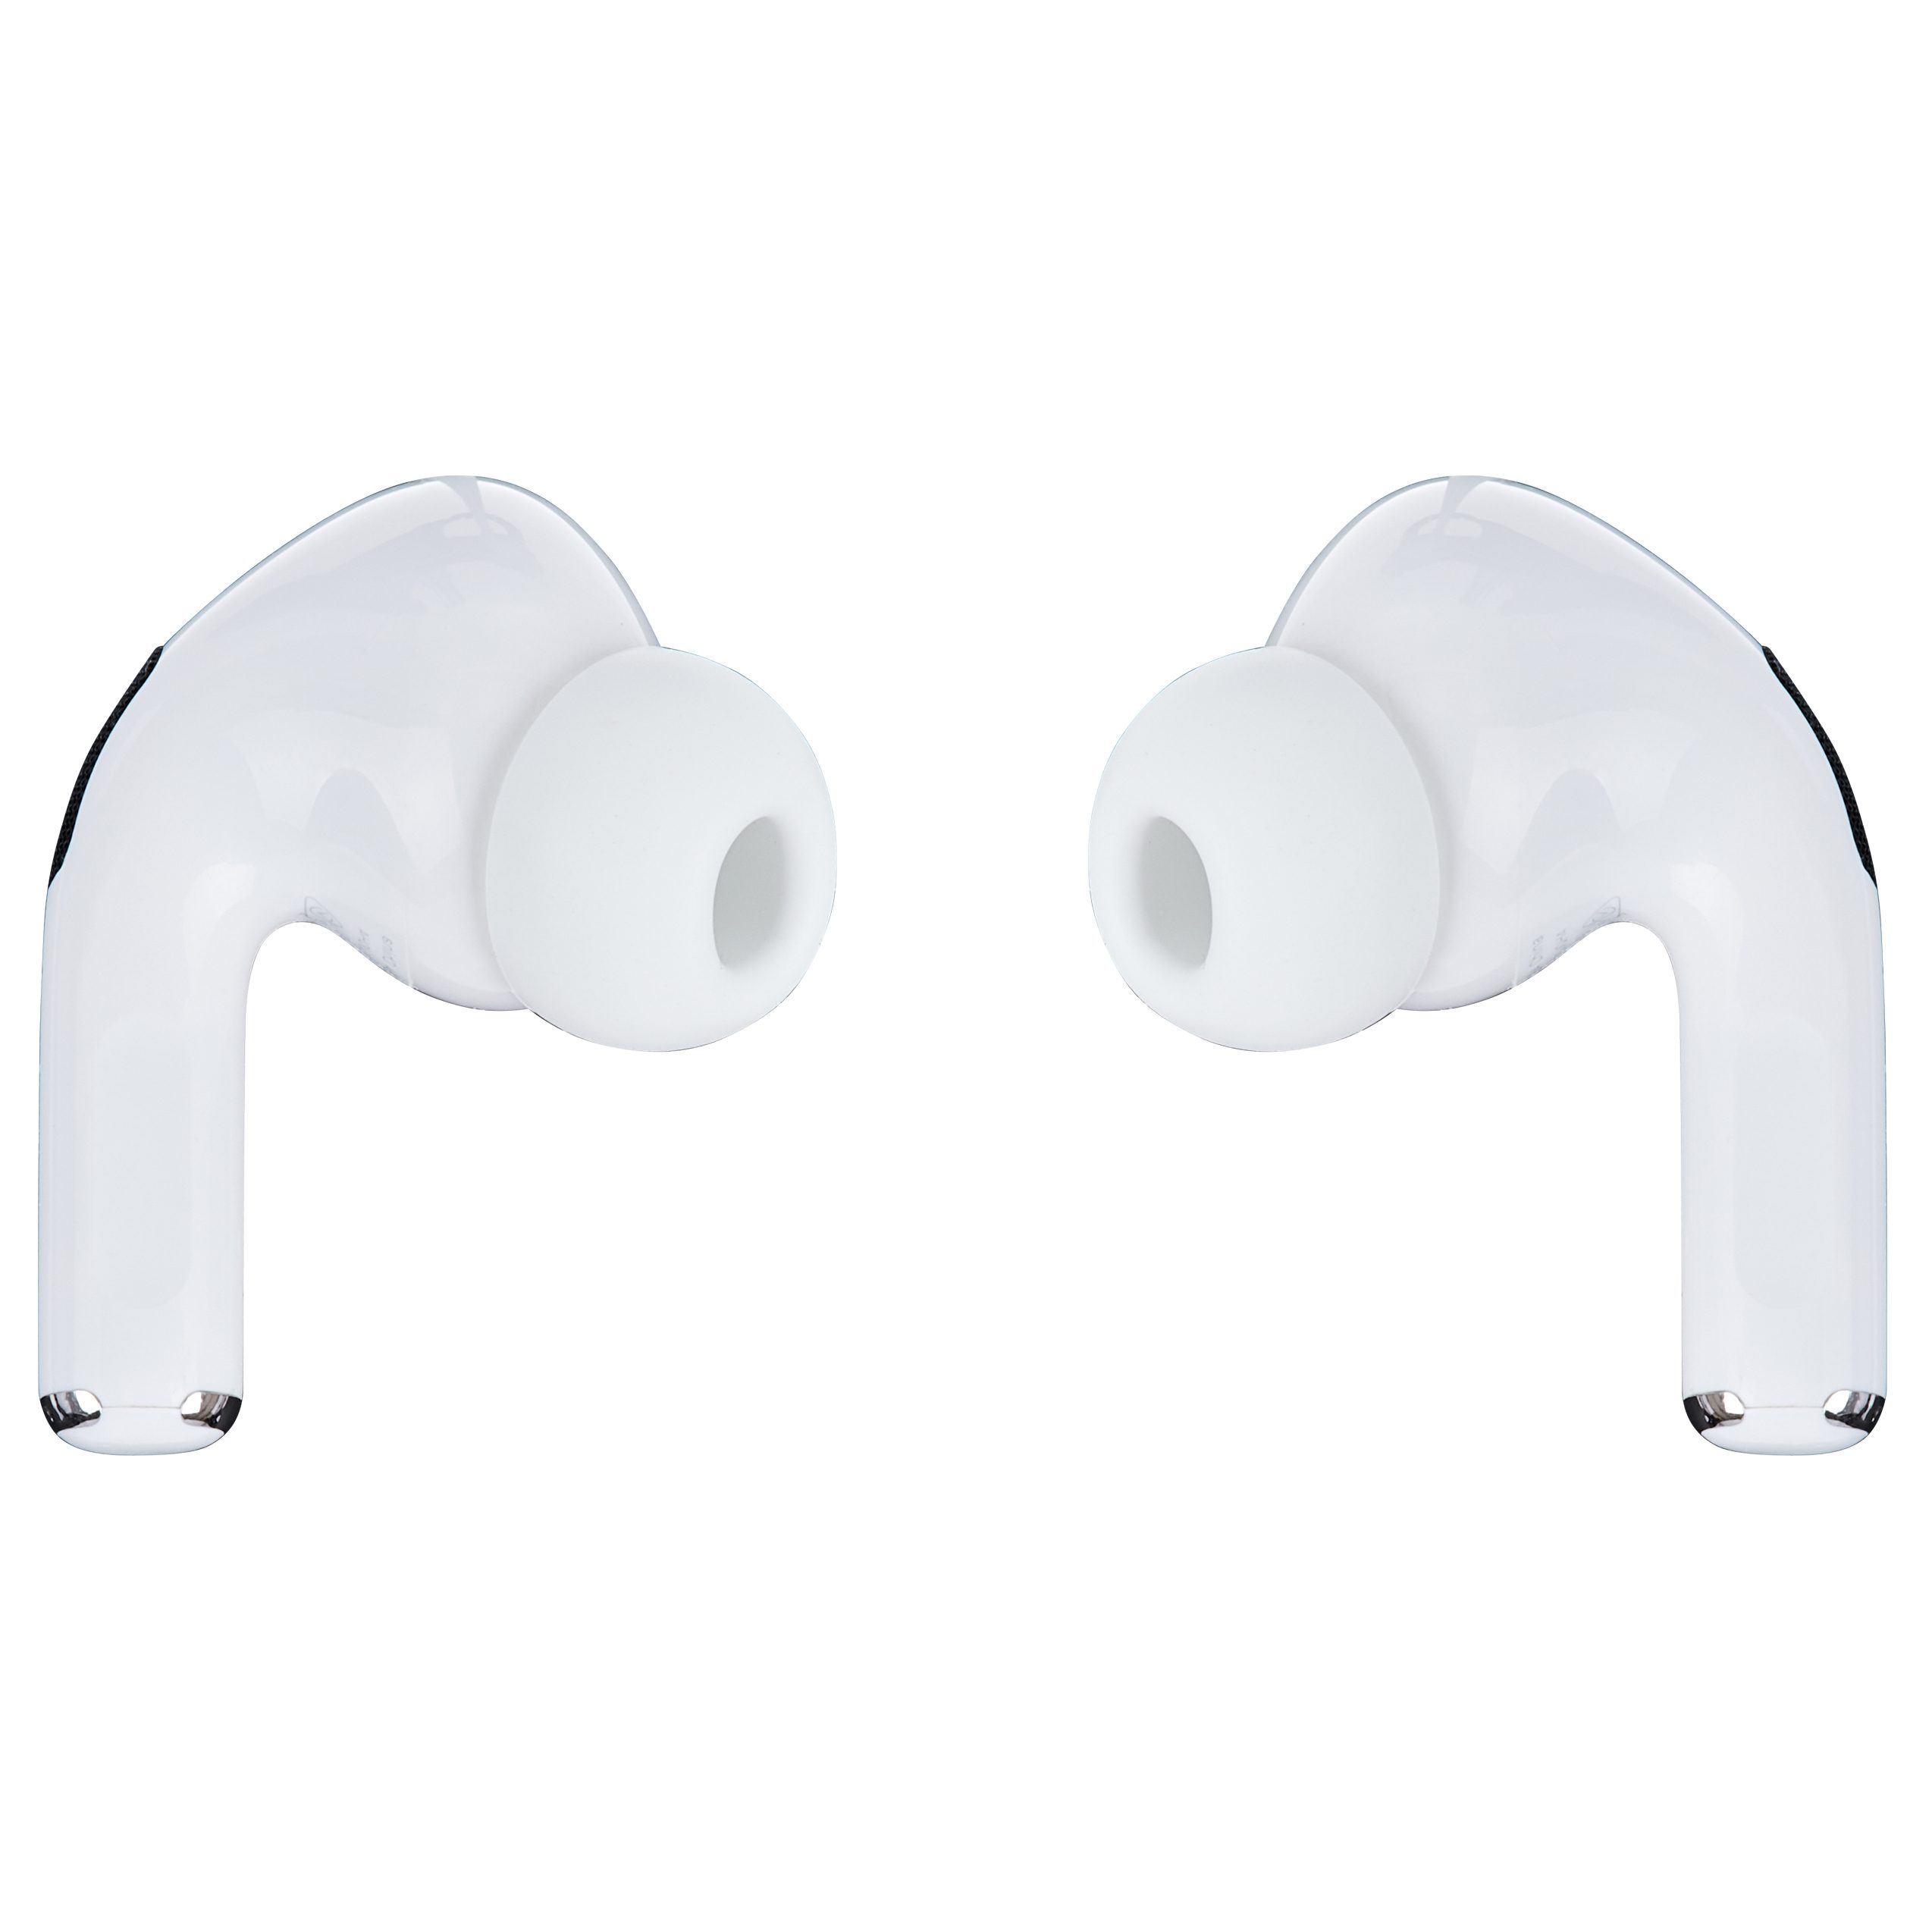 Apple AirPods Pro Review | headphonecheck.com